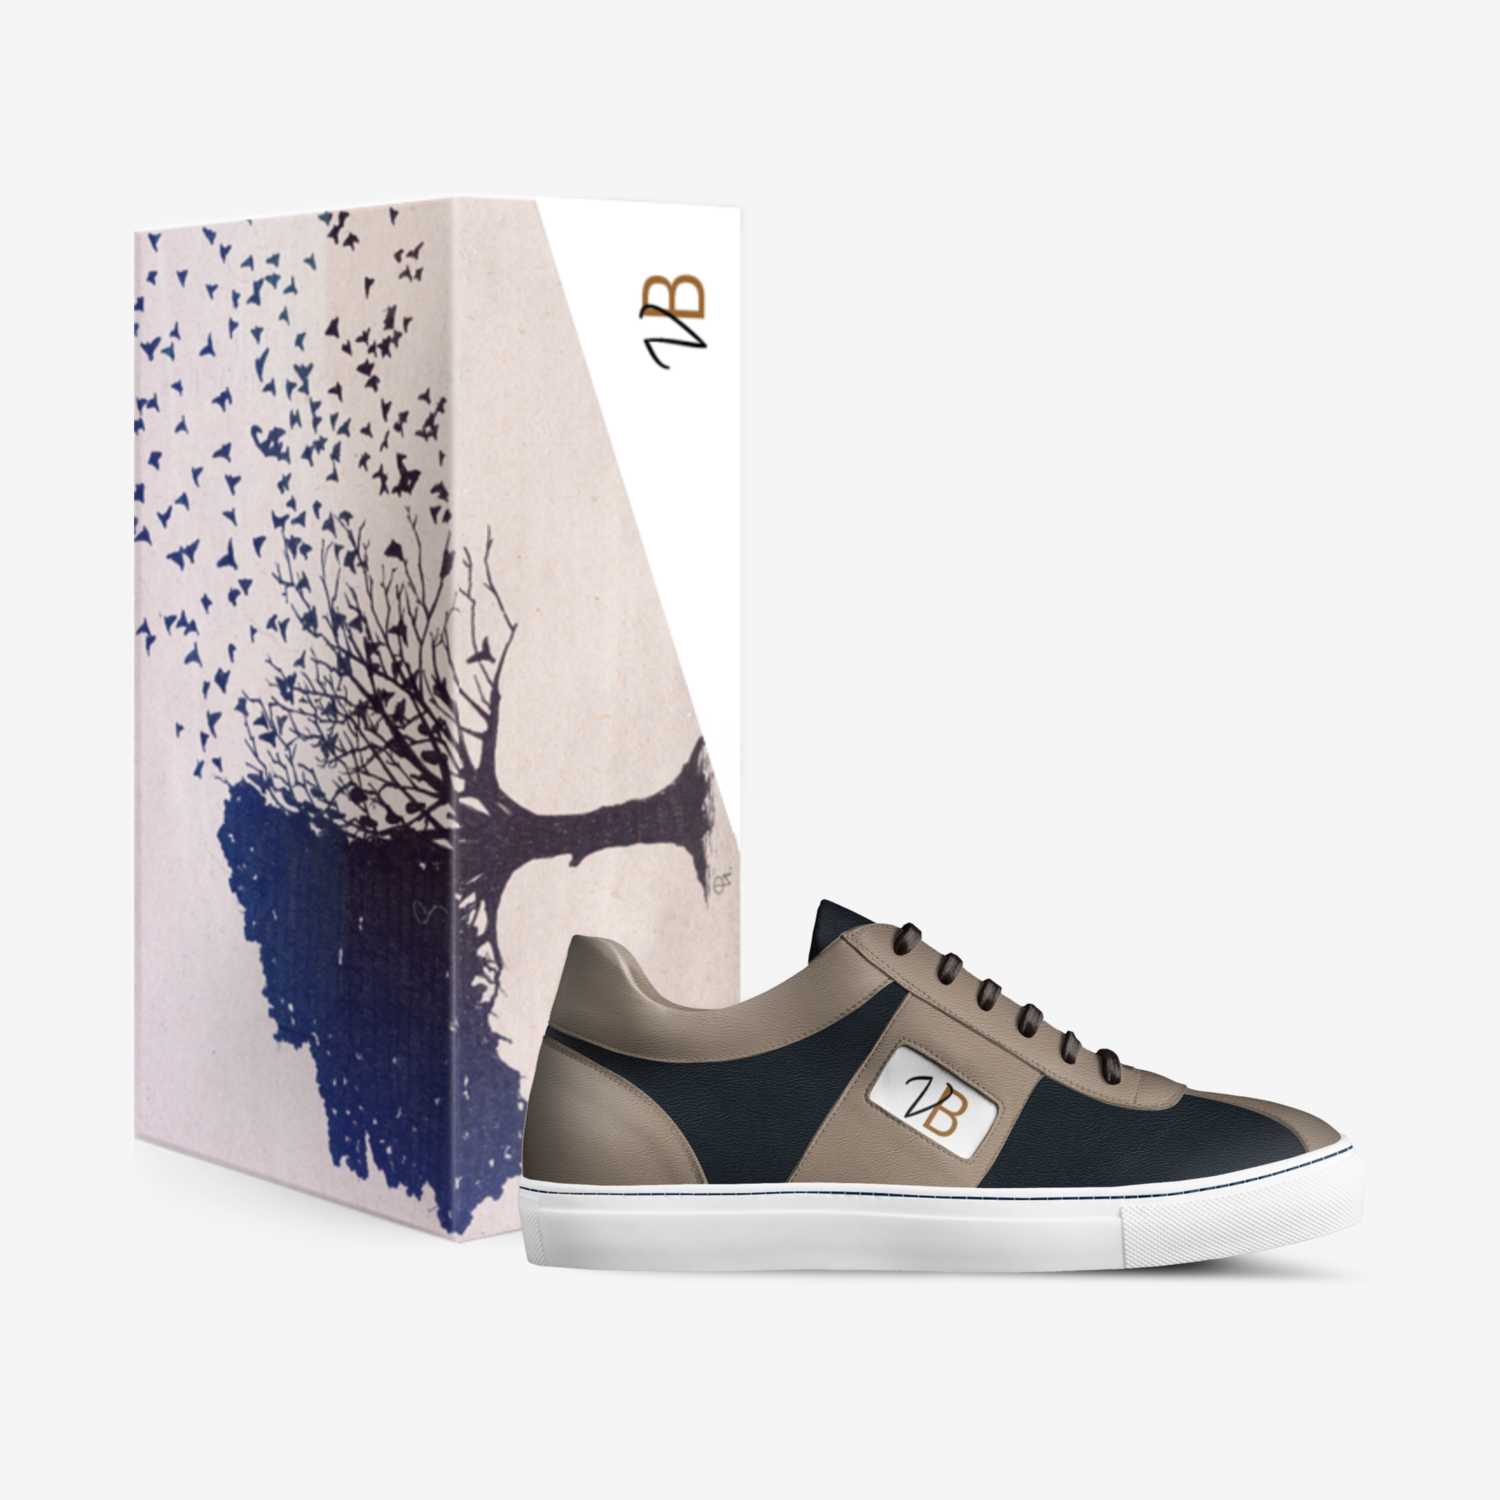 Good-looking Sneakers | A Custom Shoe concept by Vanessa K | Sneaker